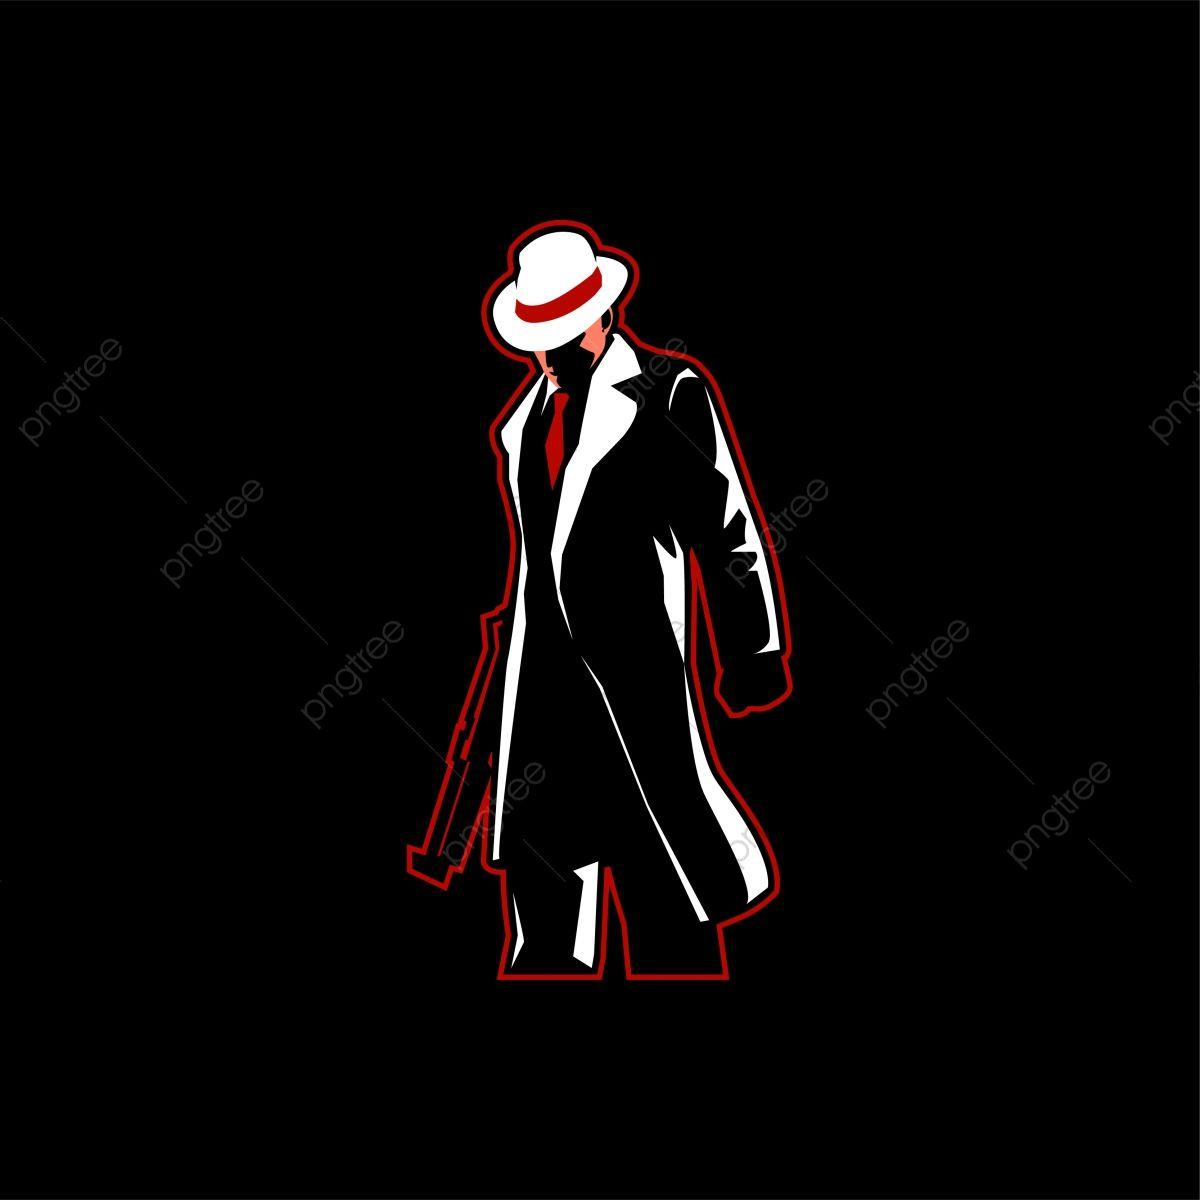 Mafia Logo - Mafia E Sport Logo Mascot, Mafia, Gangster, Crime PNG and Vector ...